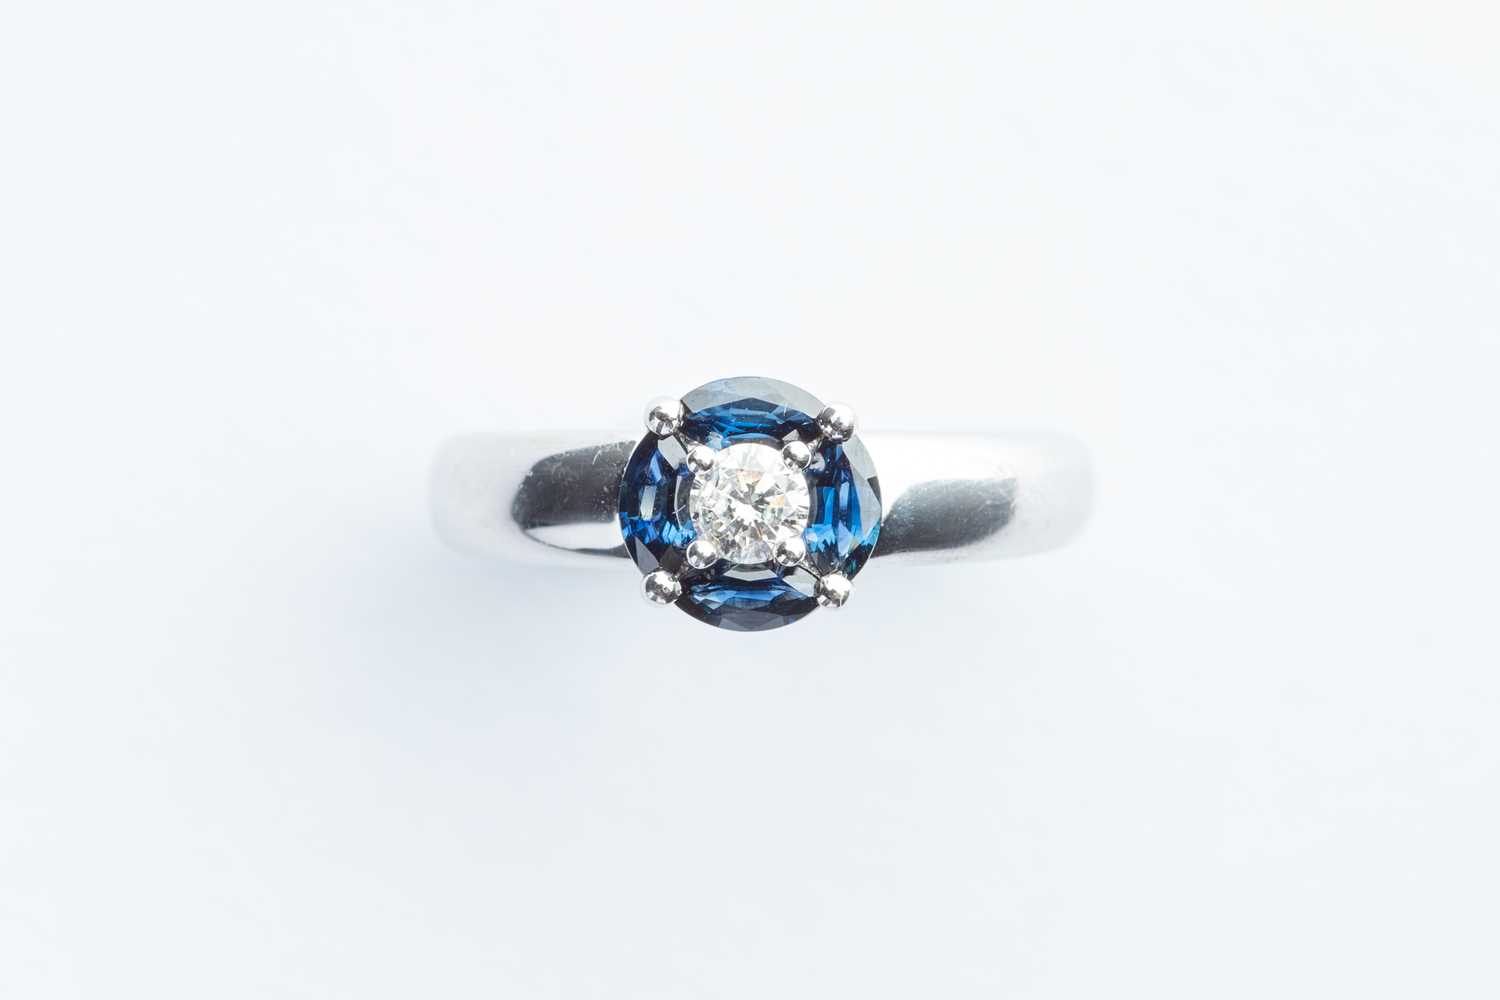 Lot 116 - A Fine 18ct White Gold Diamond & Saphire Ring